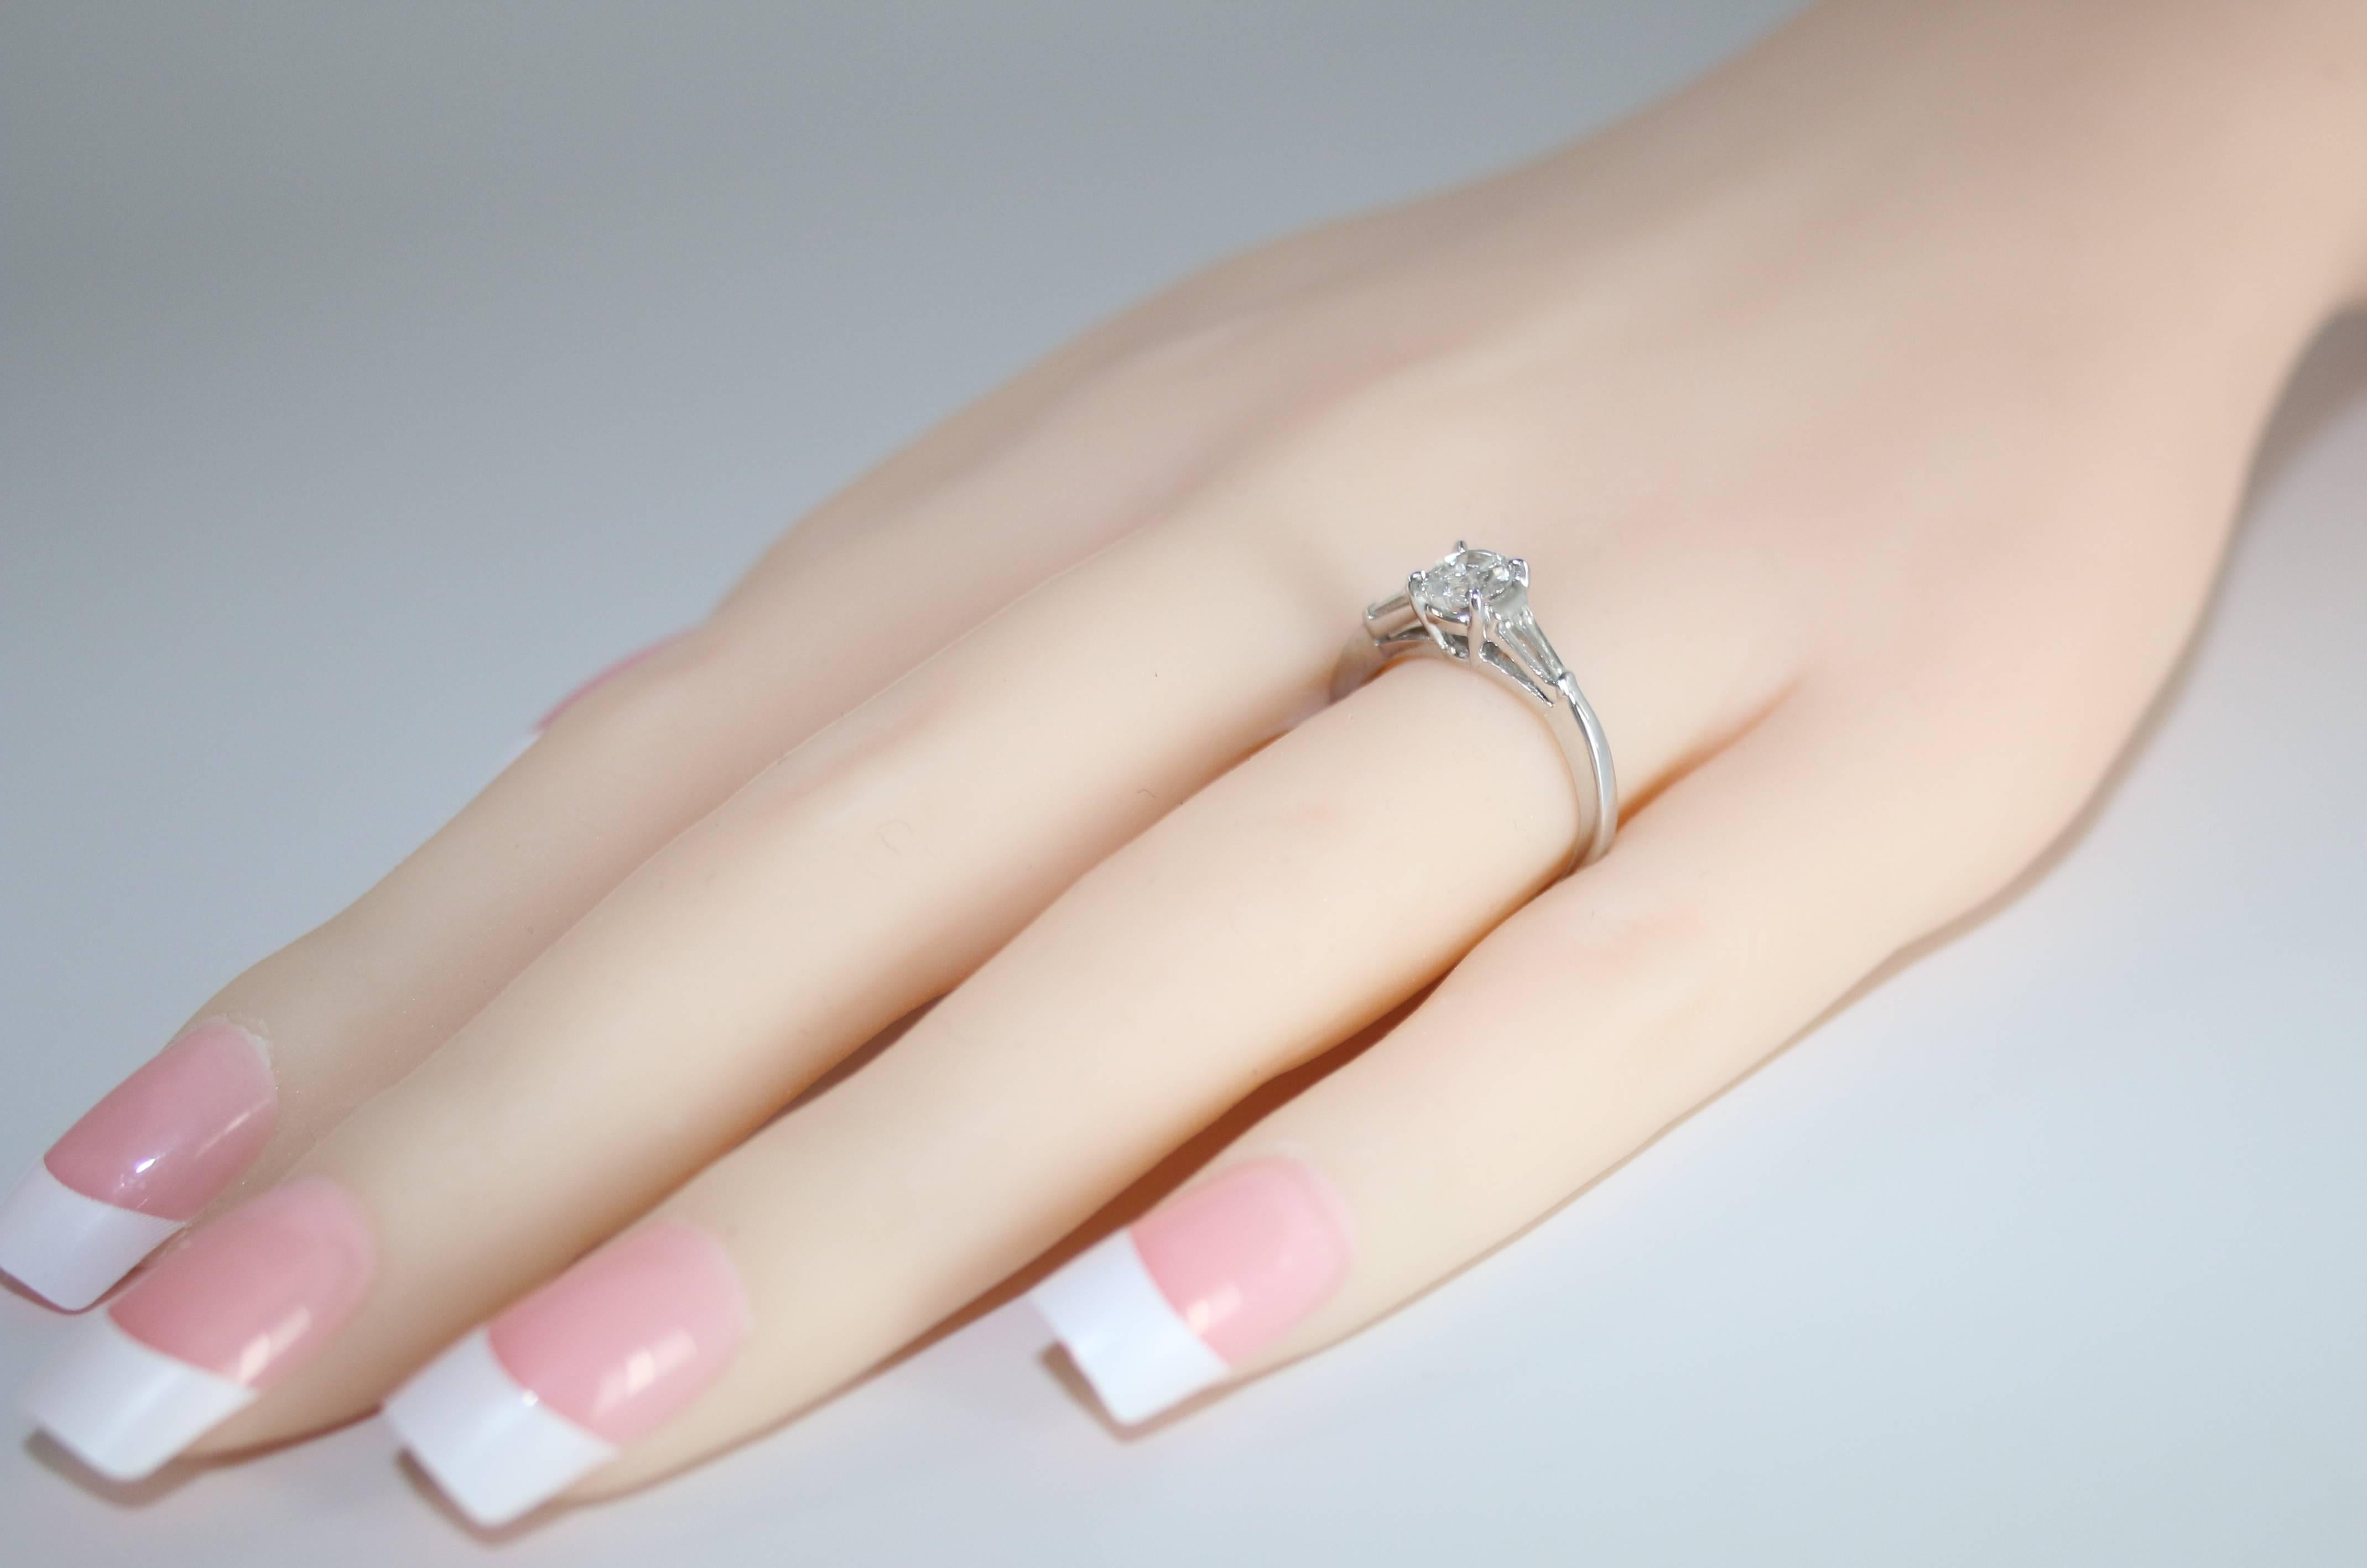 0.51 carat diamond ring